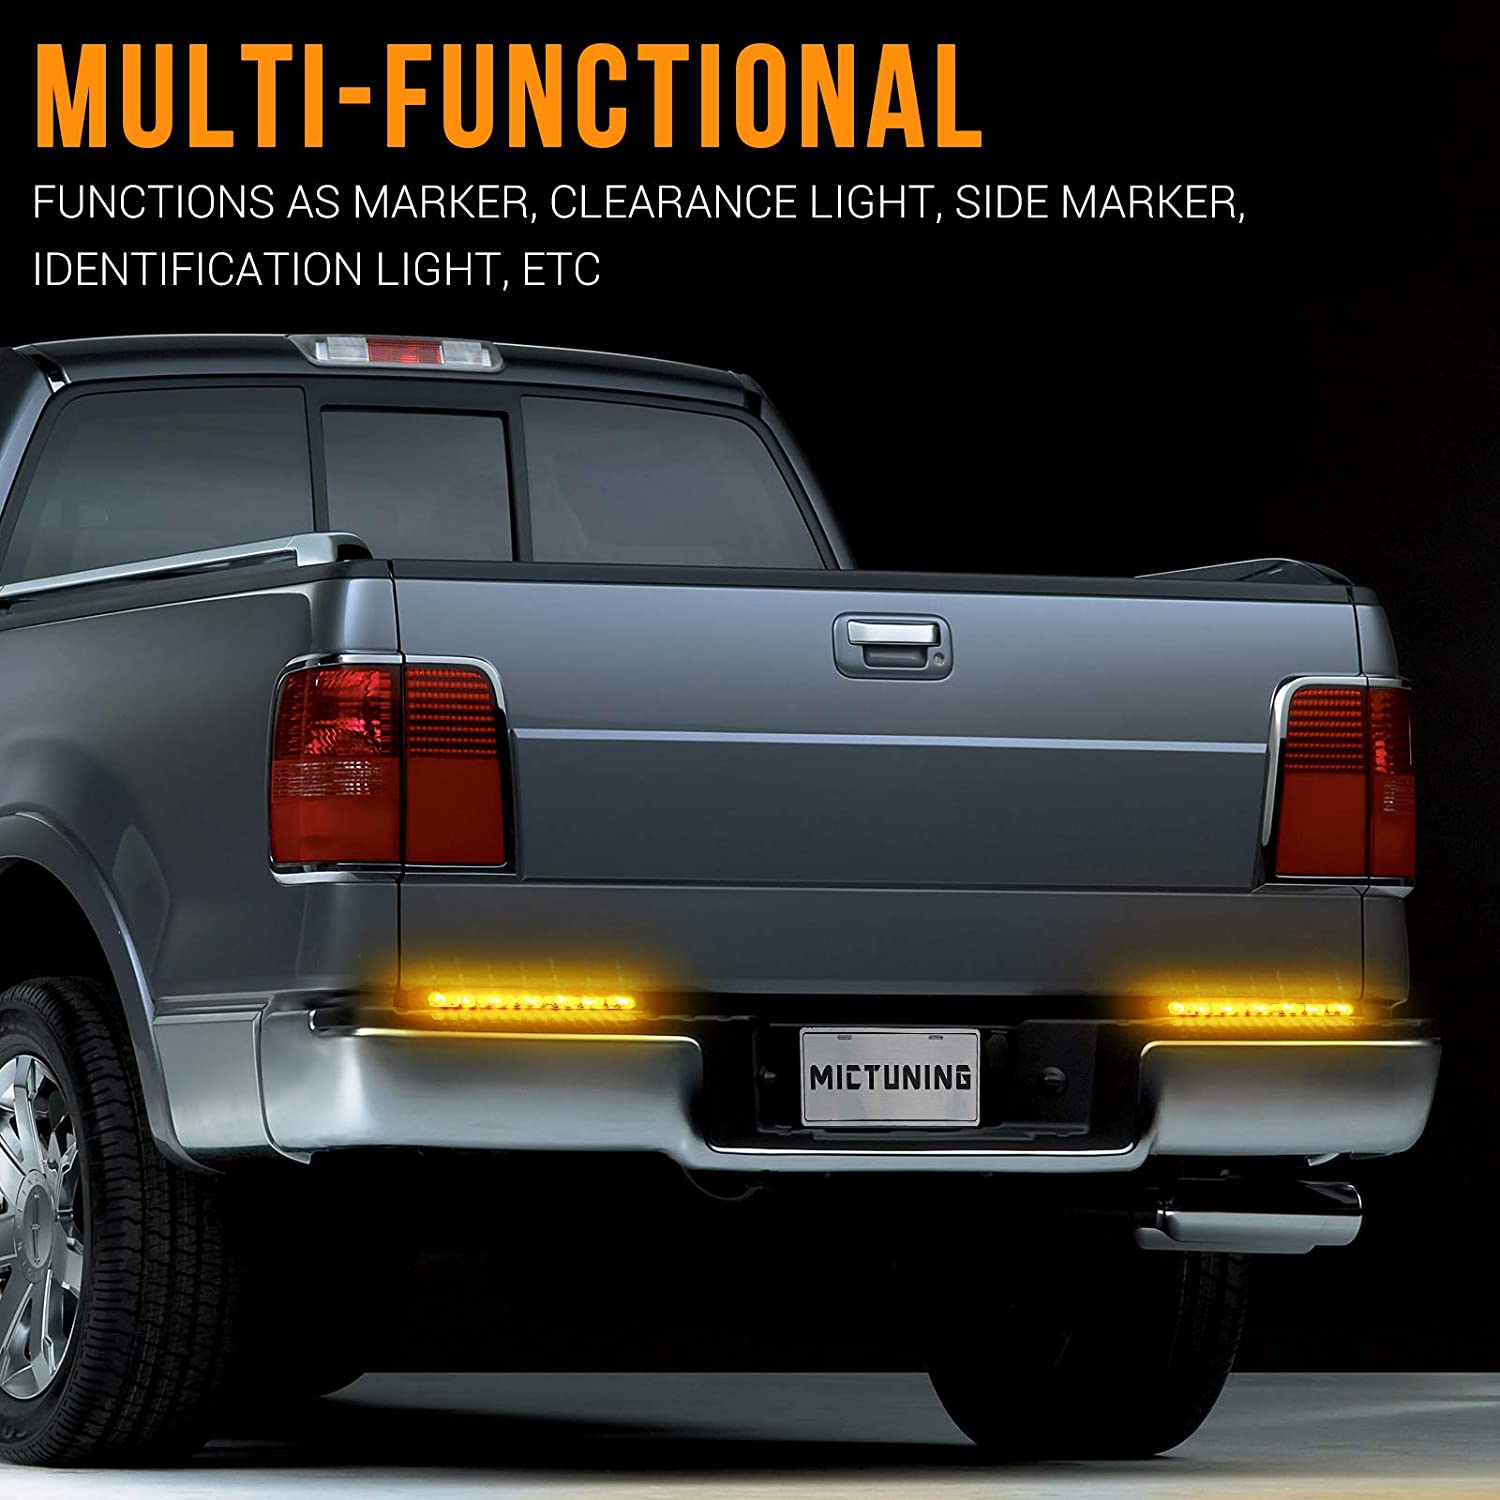 2Pcs 10' 15x LEDs Trailer Identification Light Bar Strip, Truck Rear Marker Turn Signal Light, Tail Clearance Light